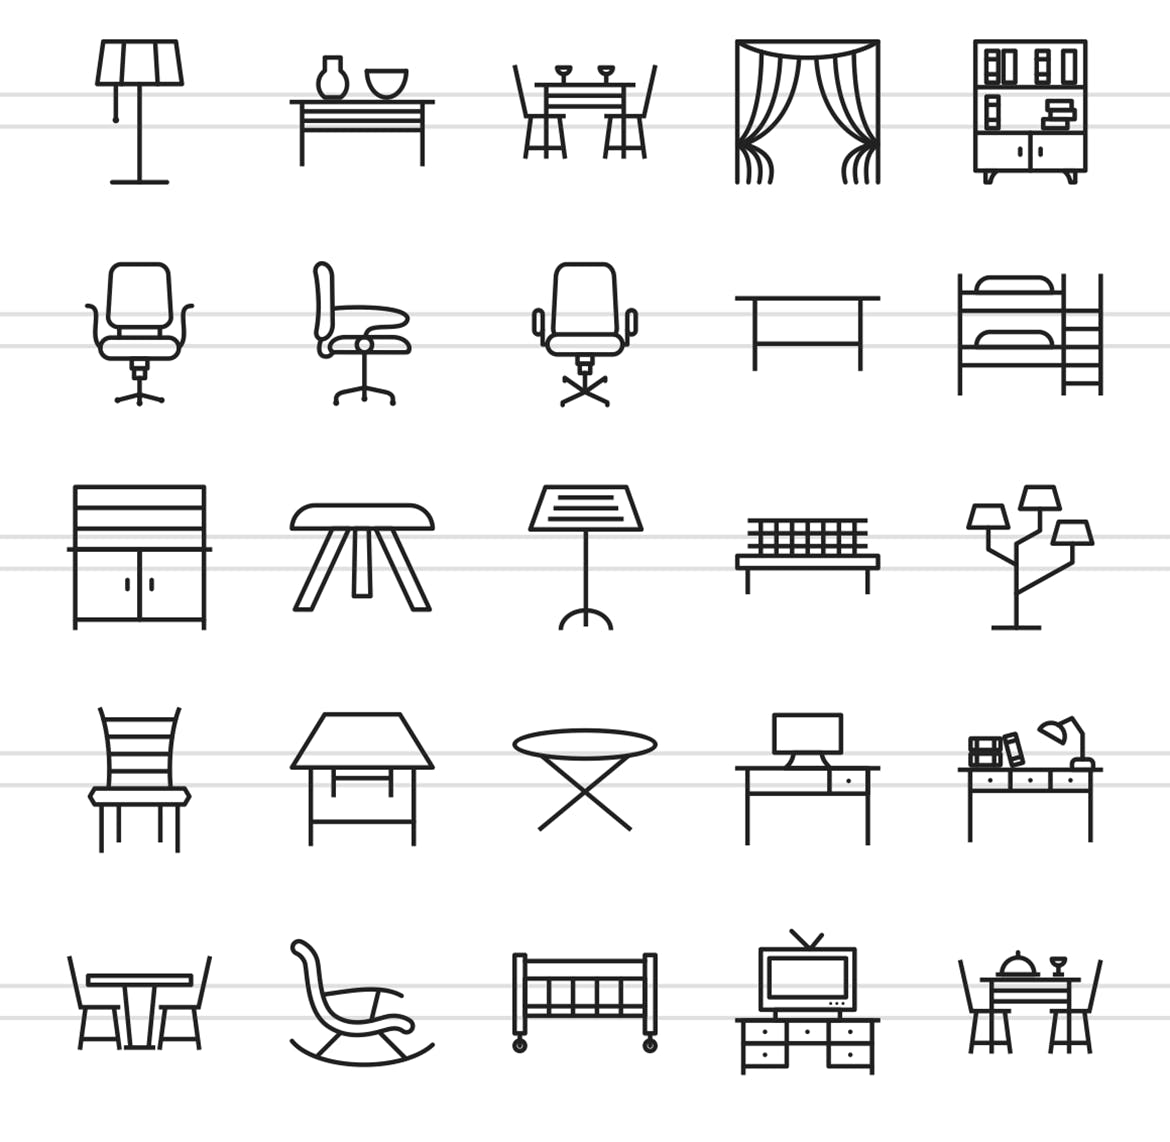 50枚家具系列线性亿图网易图库精选图标 II 50 Furniture Line Icons Season II插图(2)